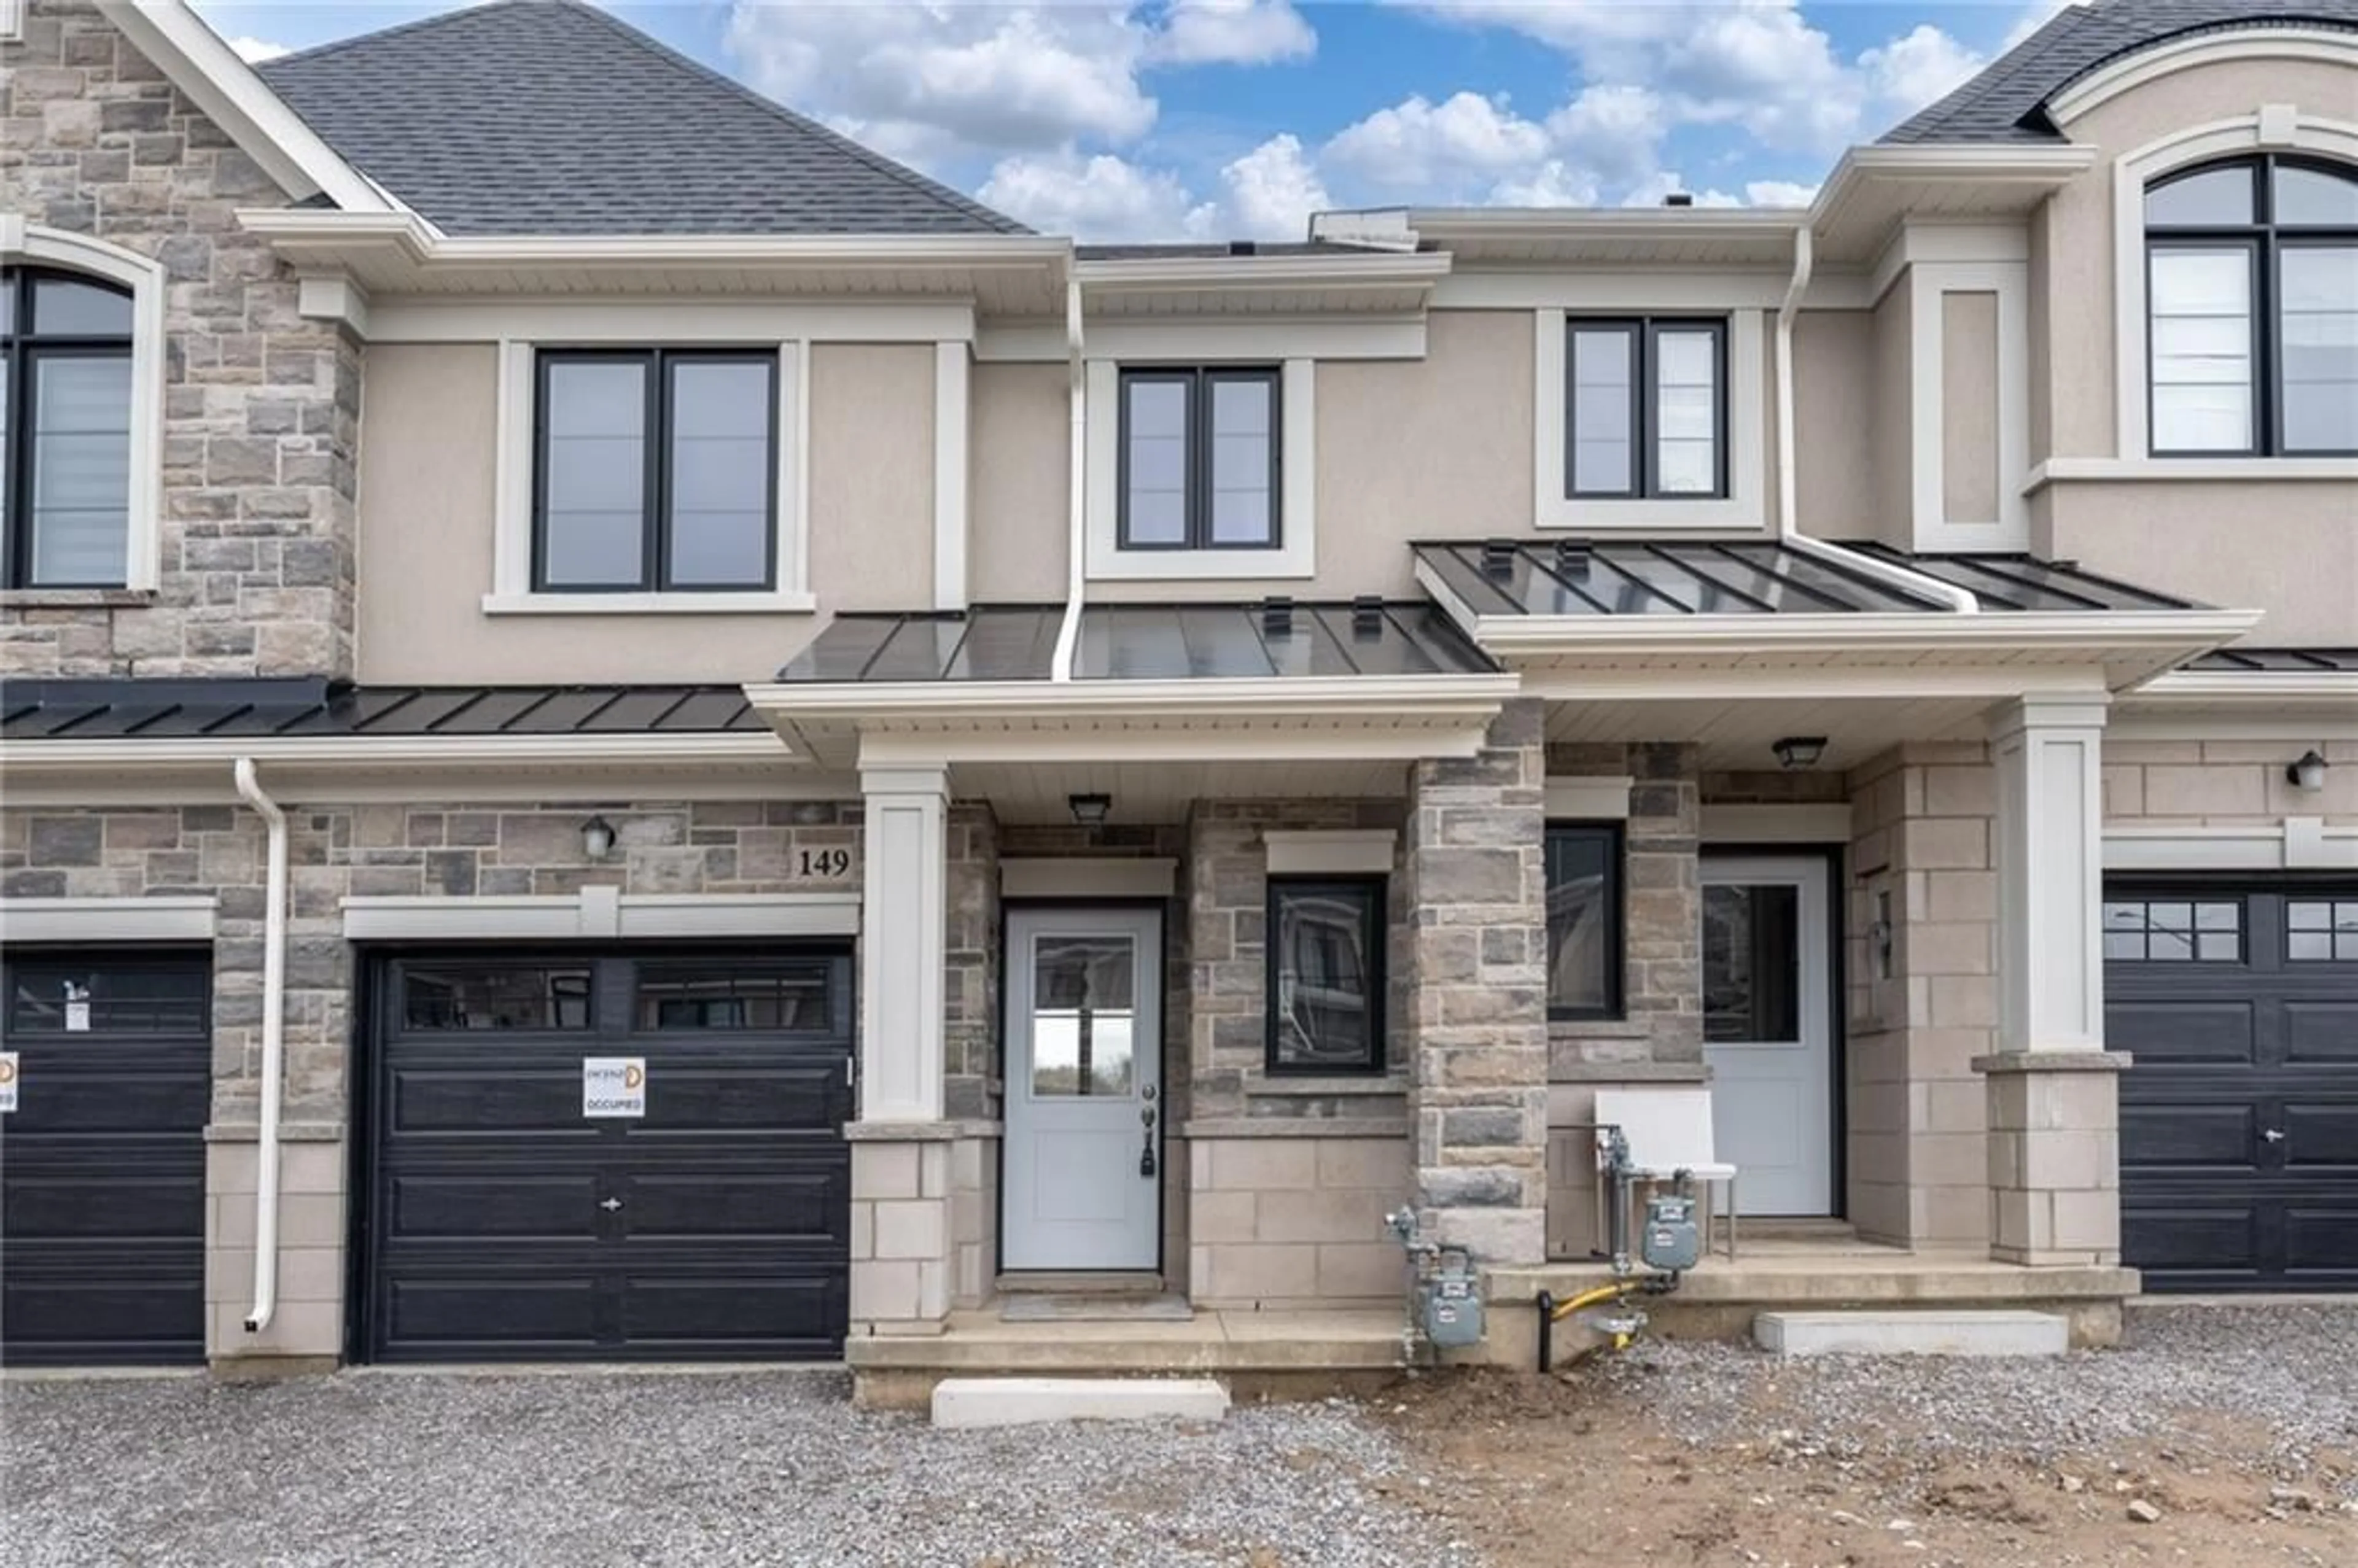 Home with brick exterior material for 149 Aquasanta Cres, Hamilton Ontario L8K 1B2